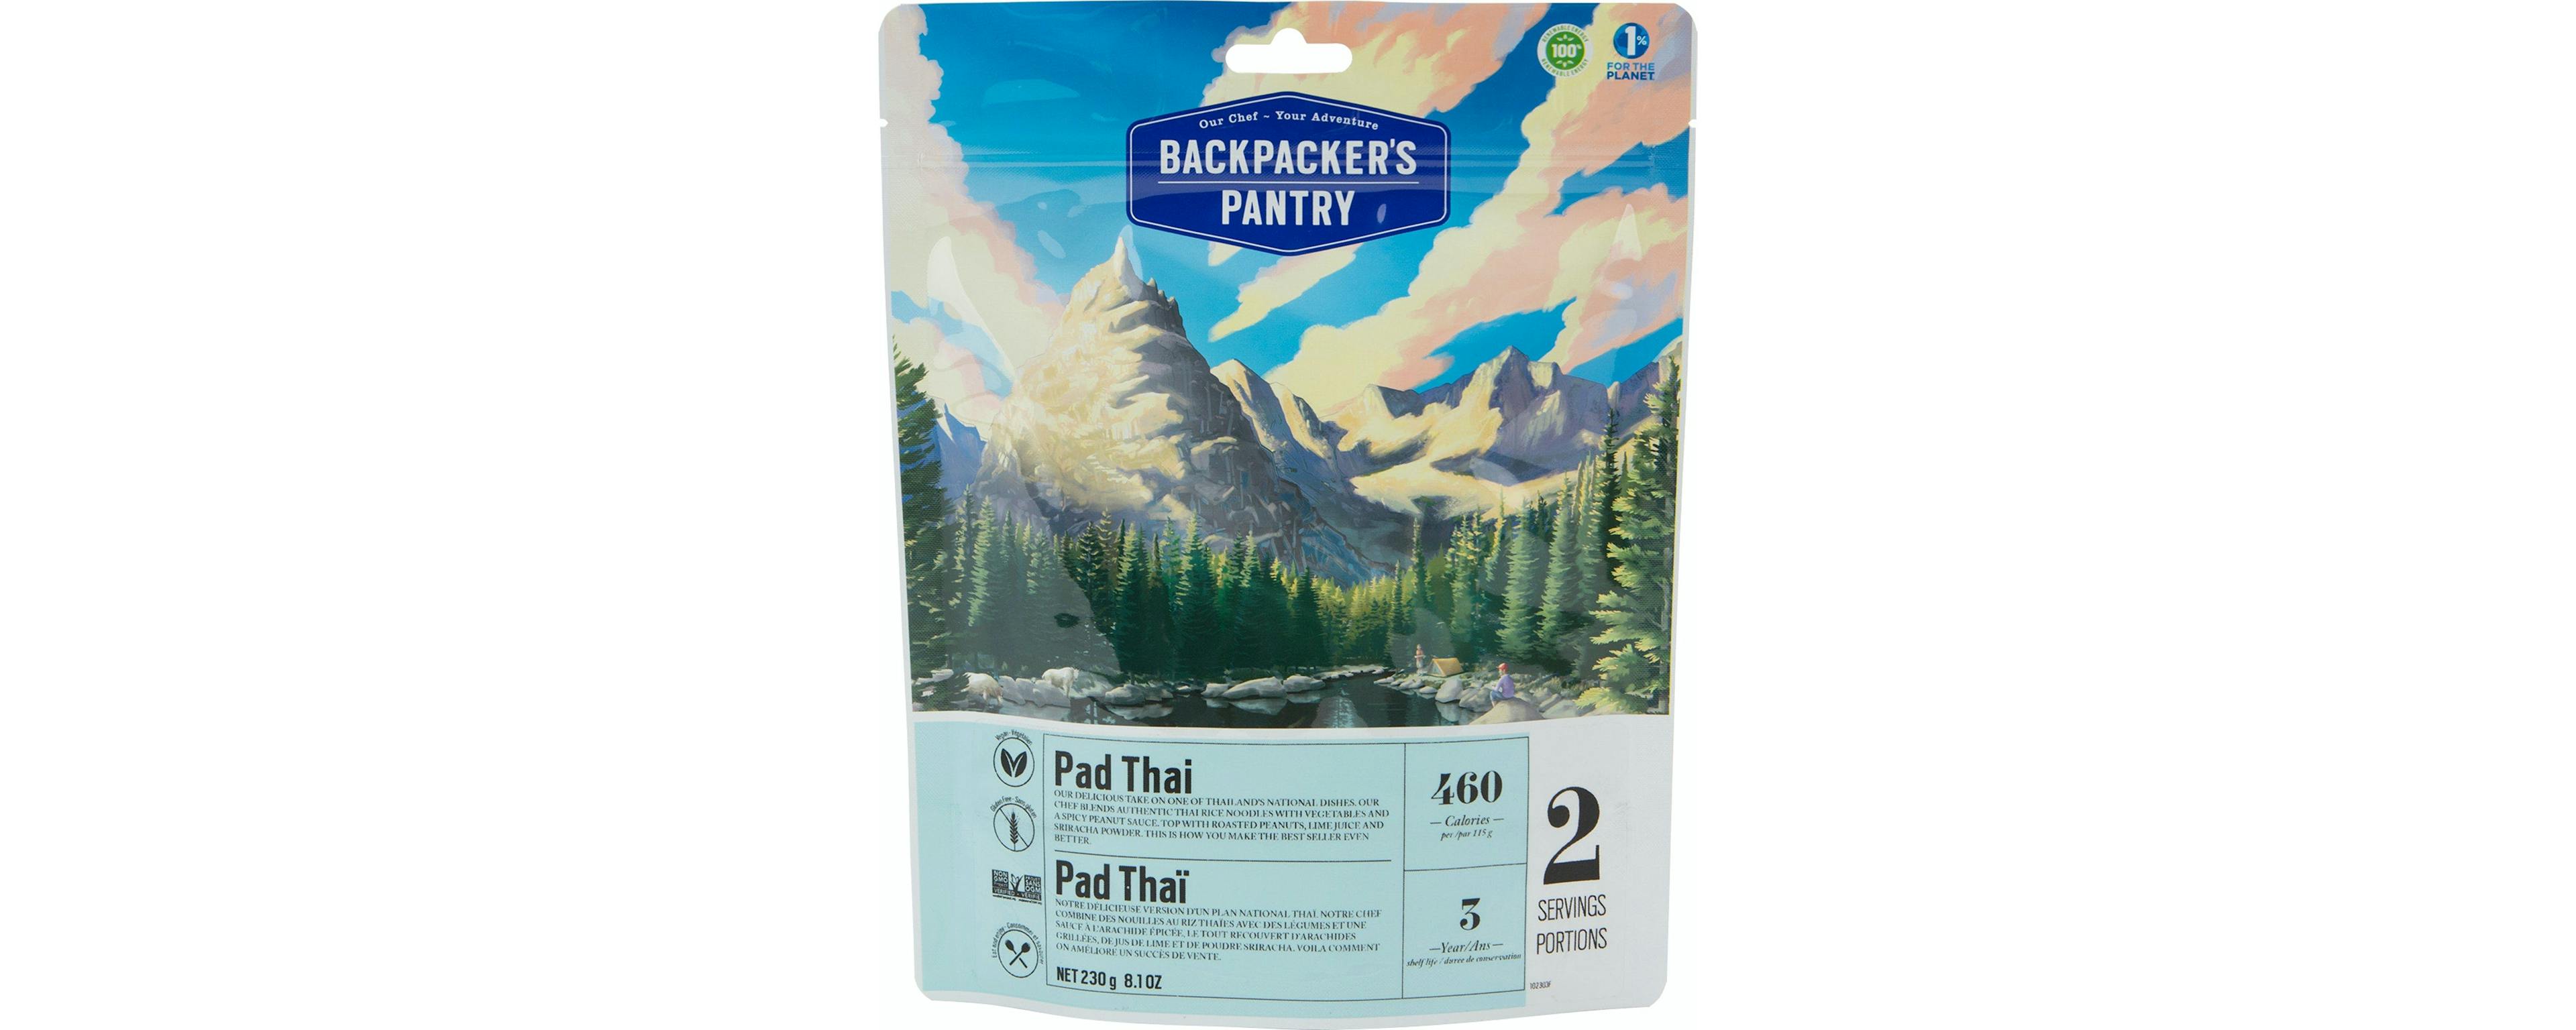 Backpackers pantry pad thai meal